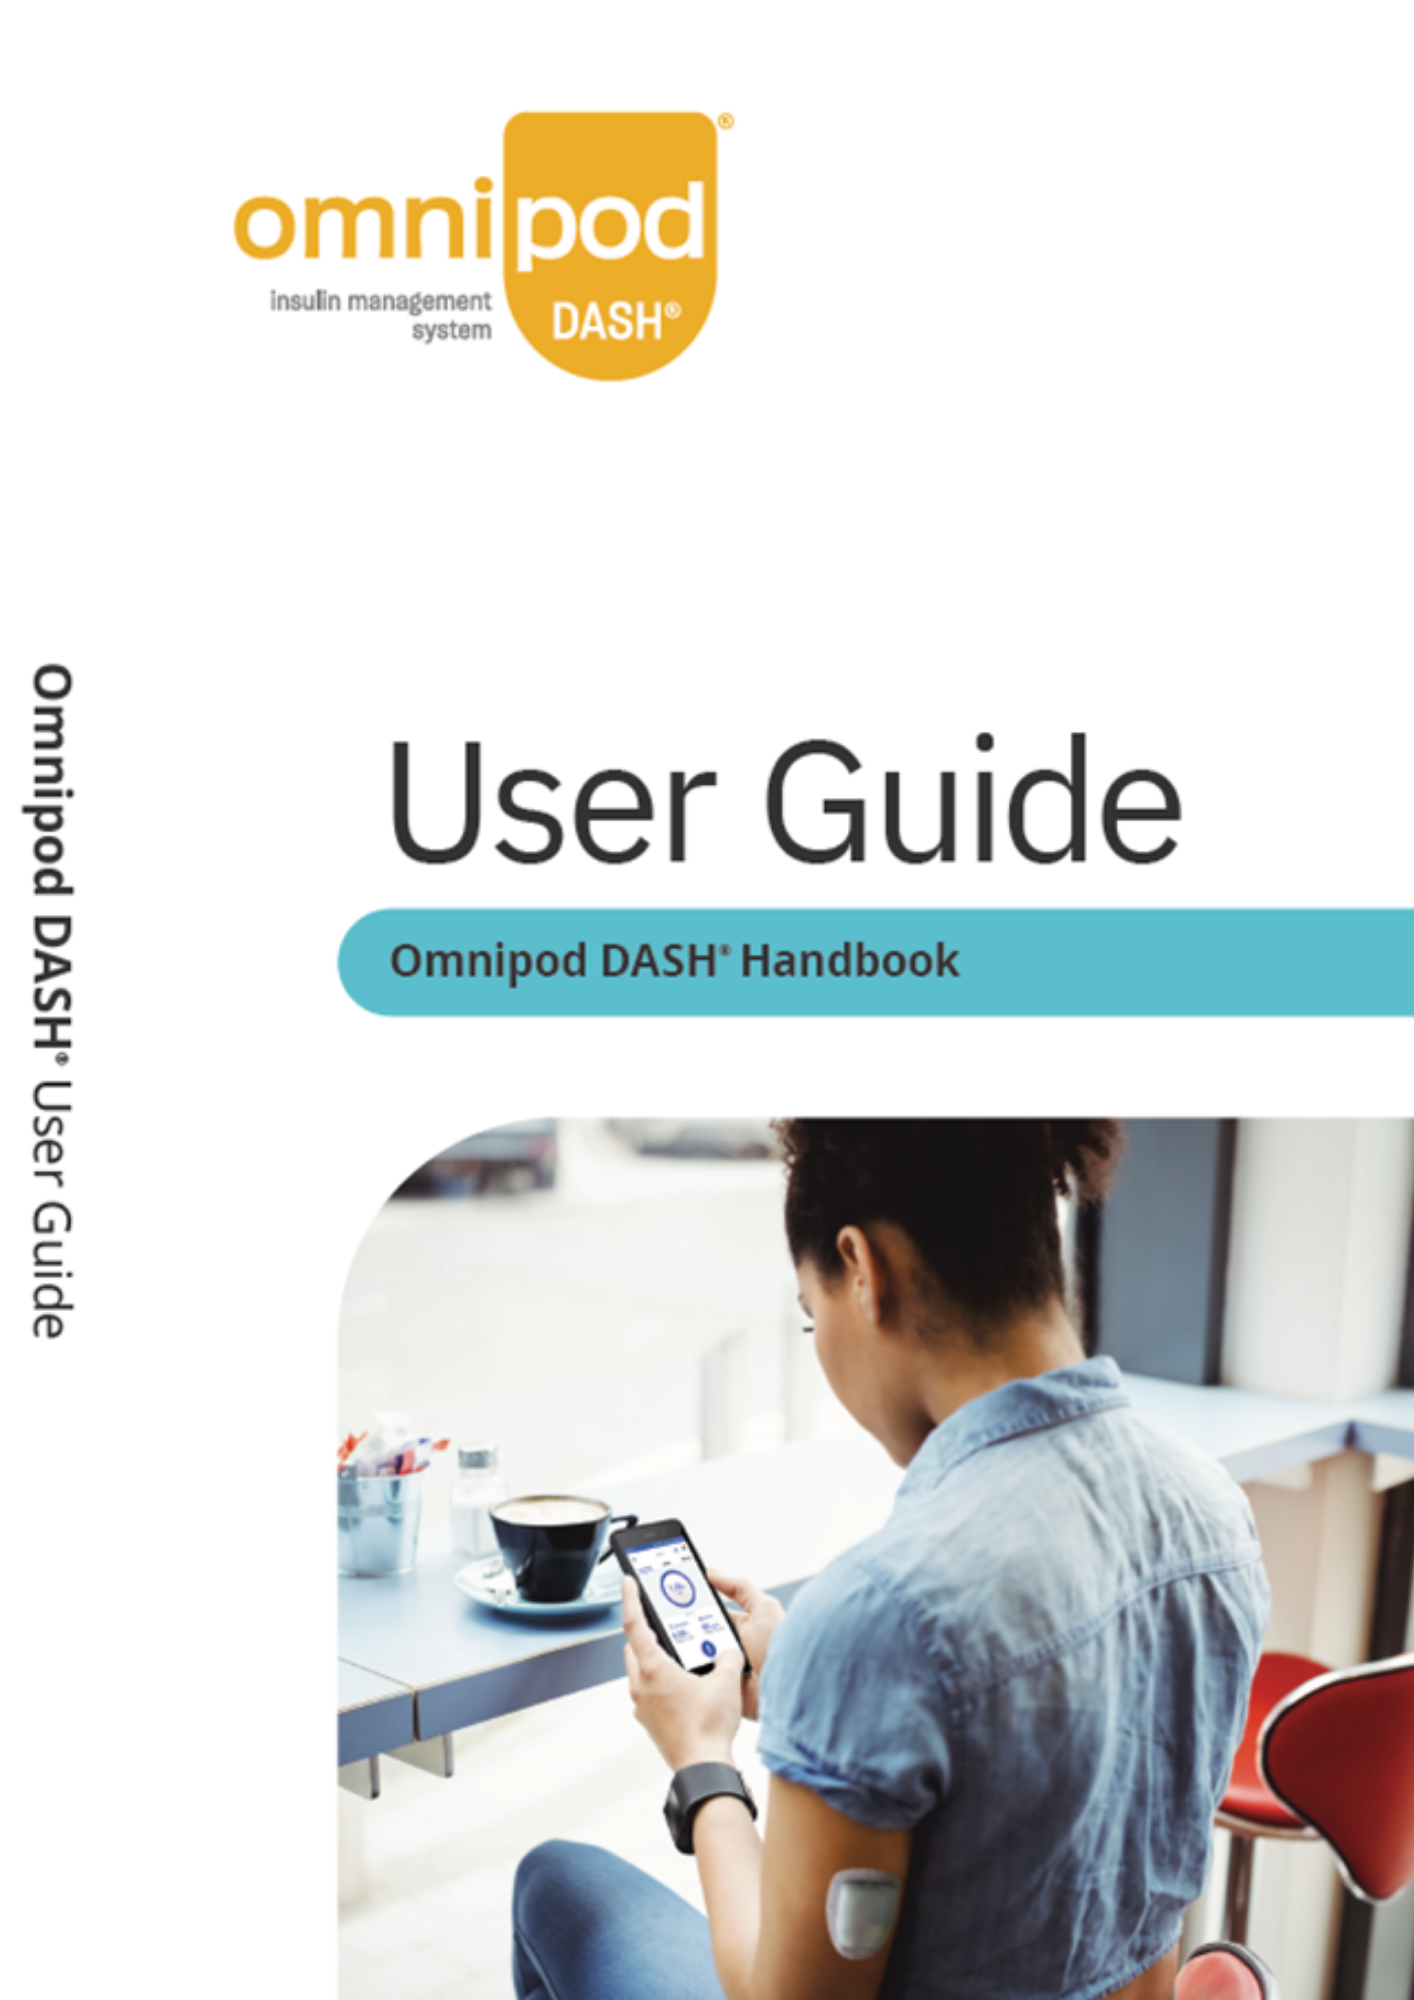 Omnipod DASH System User Guide